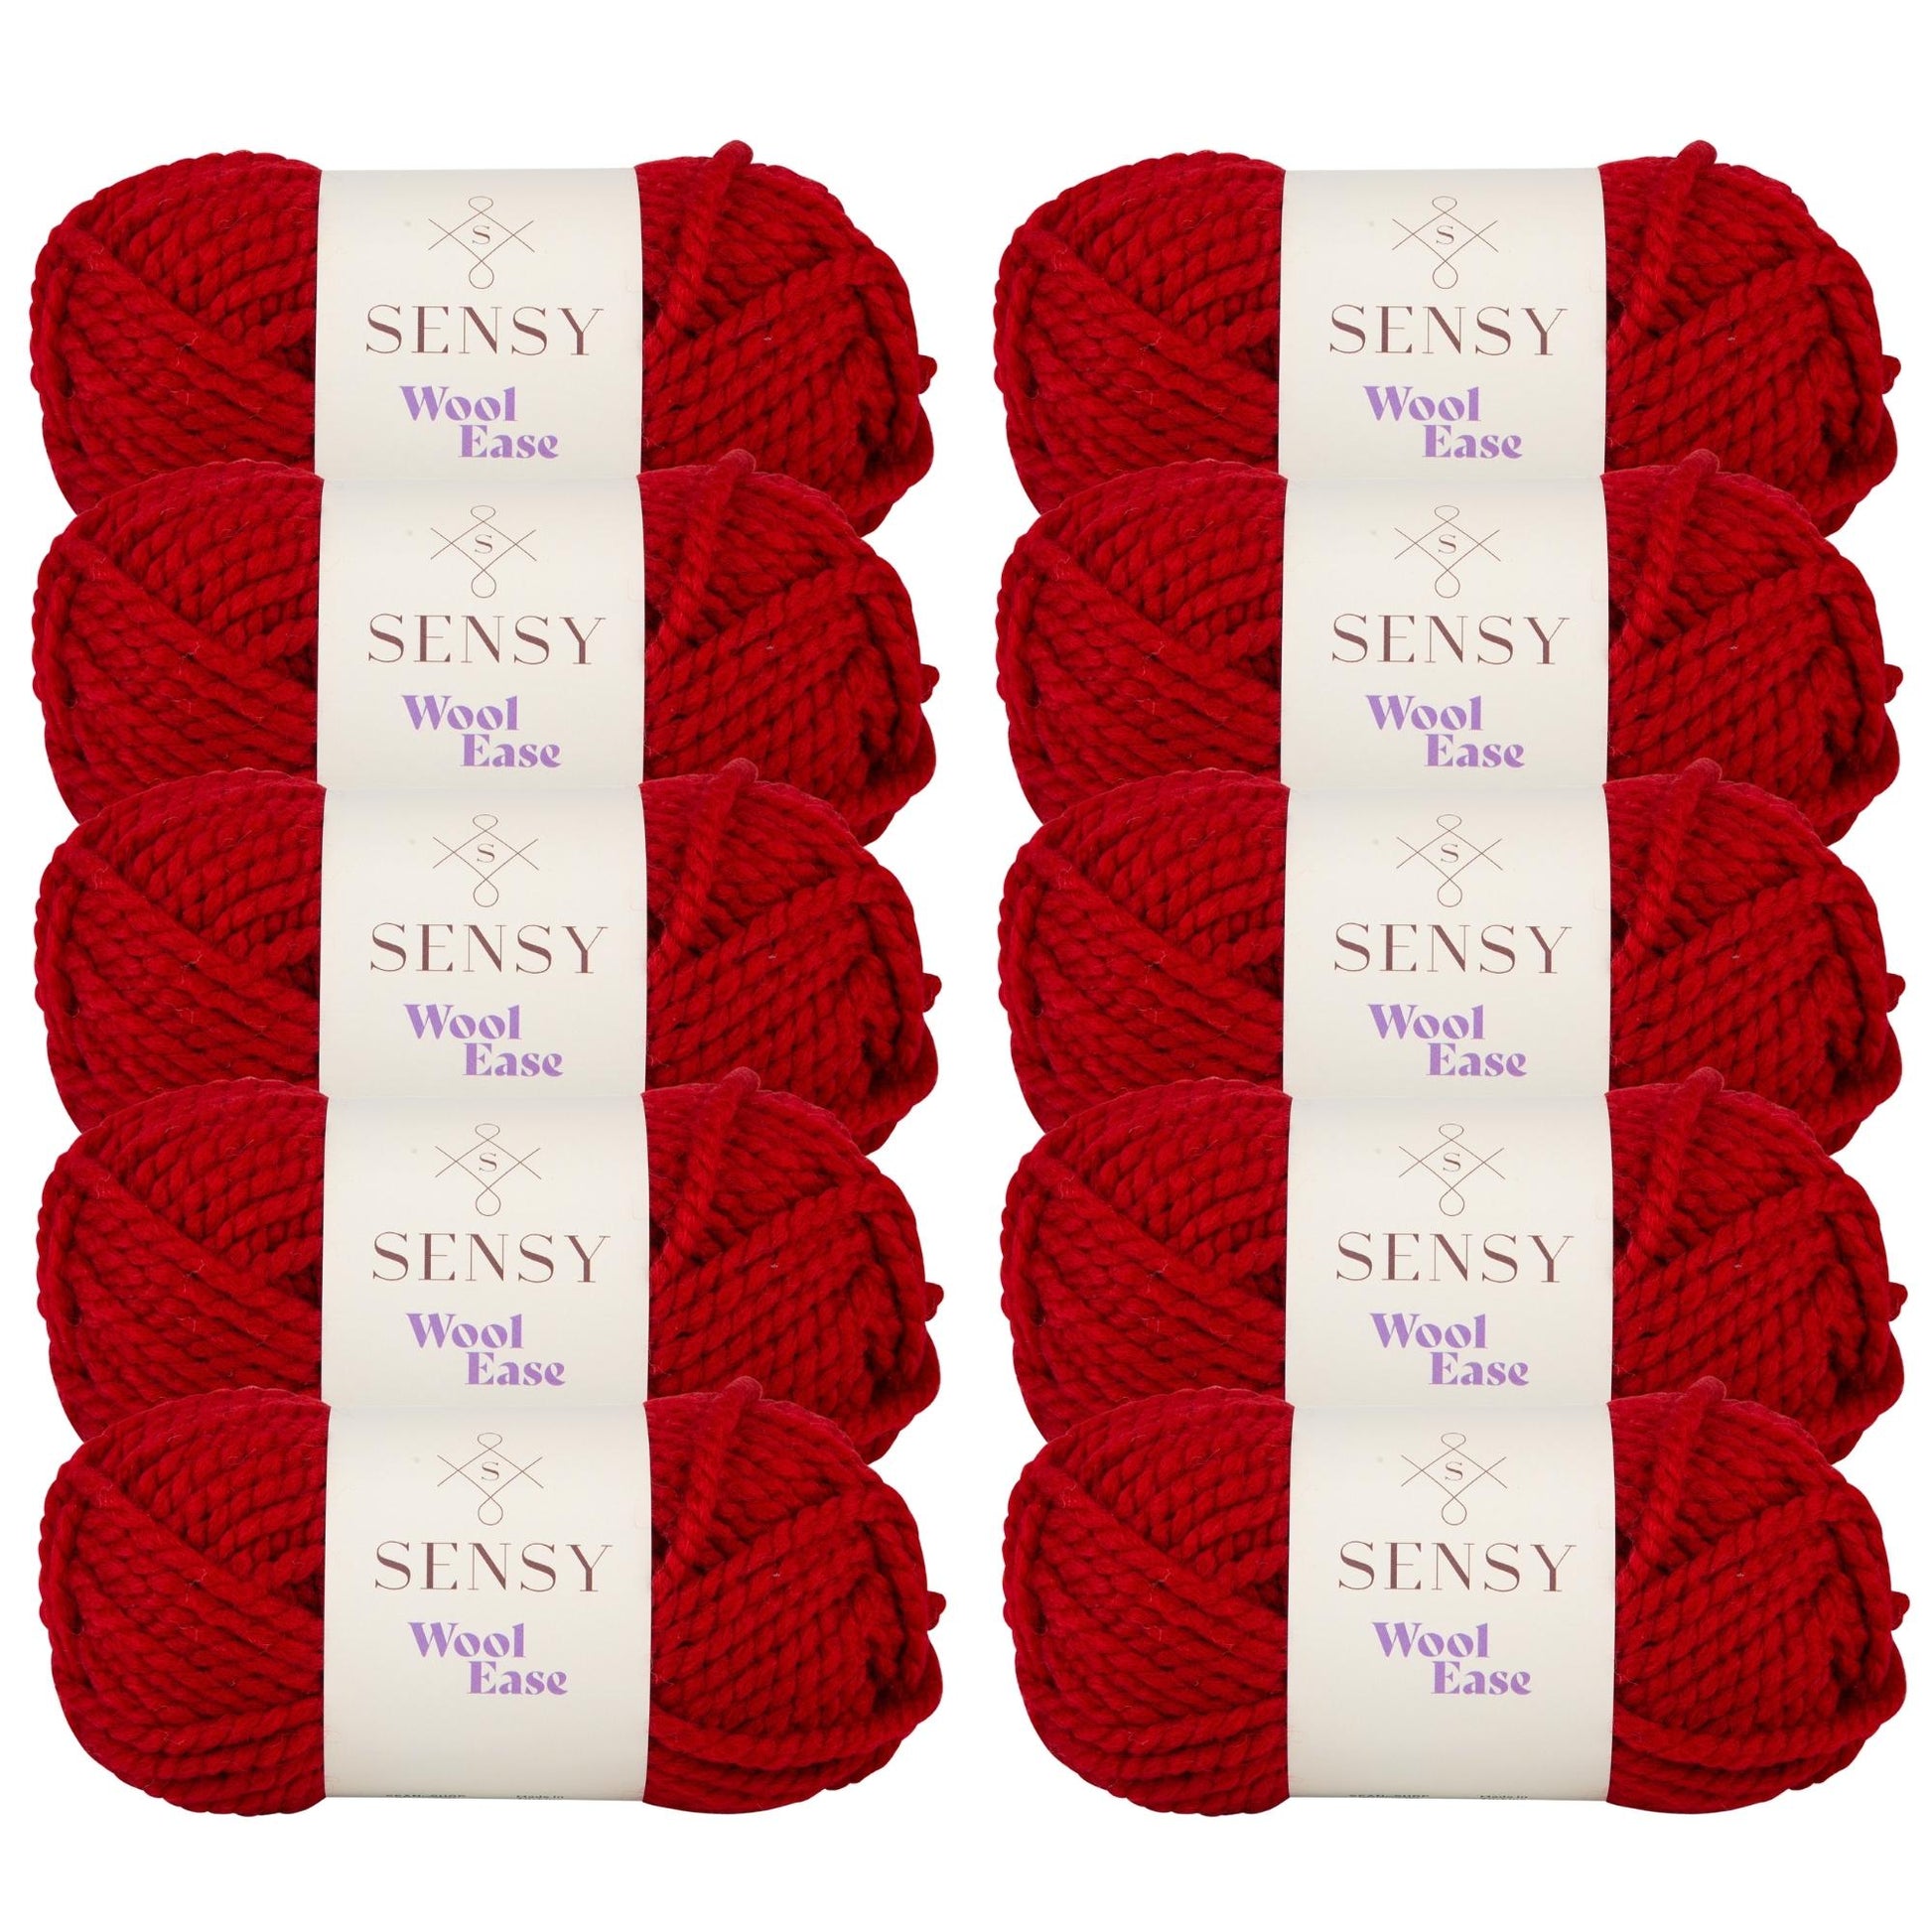 Sensy Wool Ease Yarn, 3.5 oz, 66 Yards, Gauge 6 Super Bulky